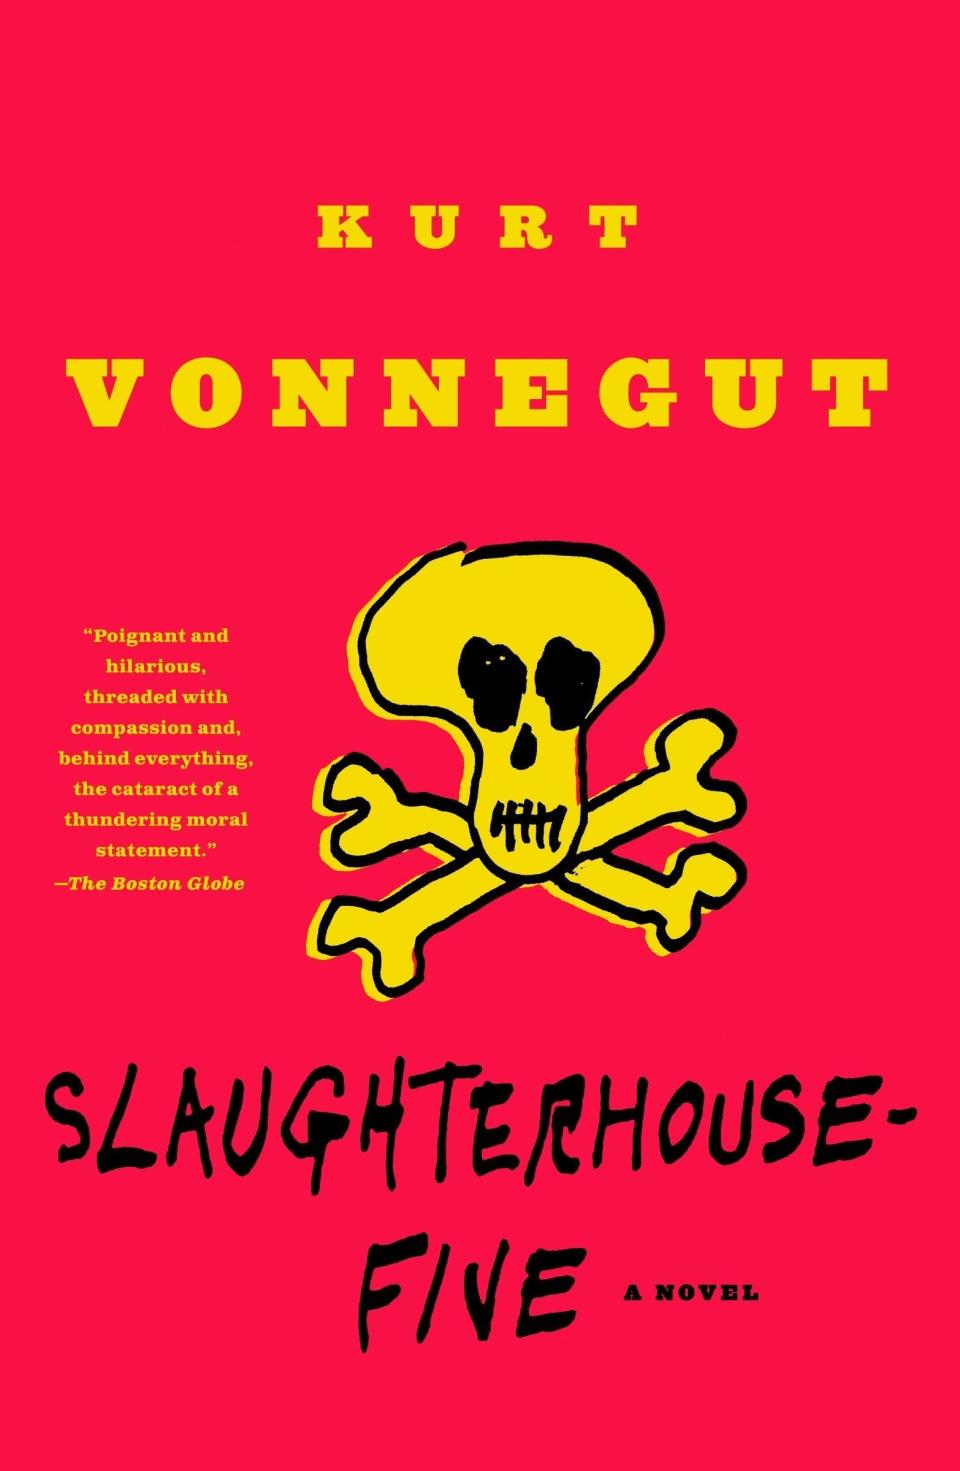 The cover of "Slaughterhouse Five" by Kurt Vonnegut.